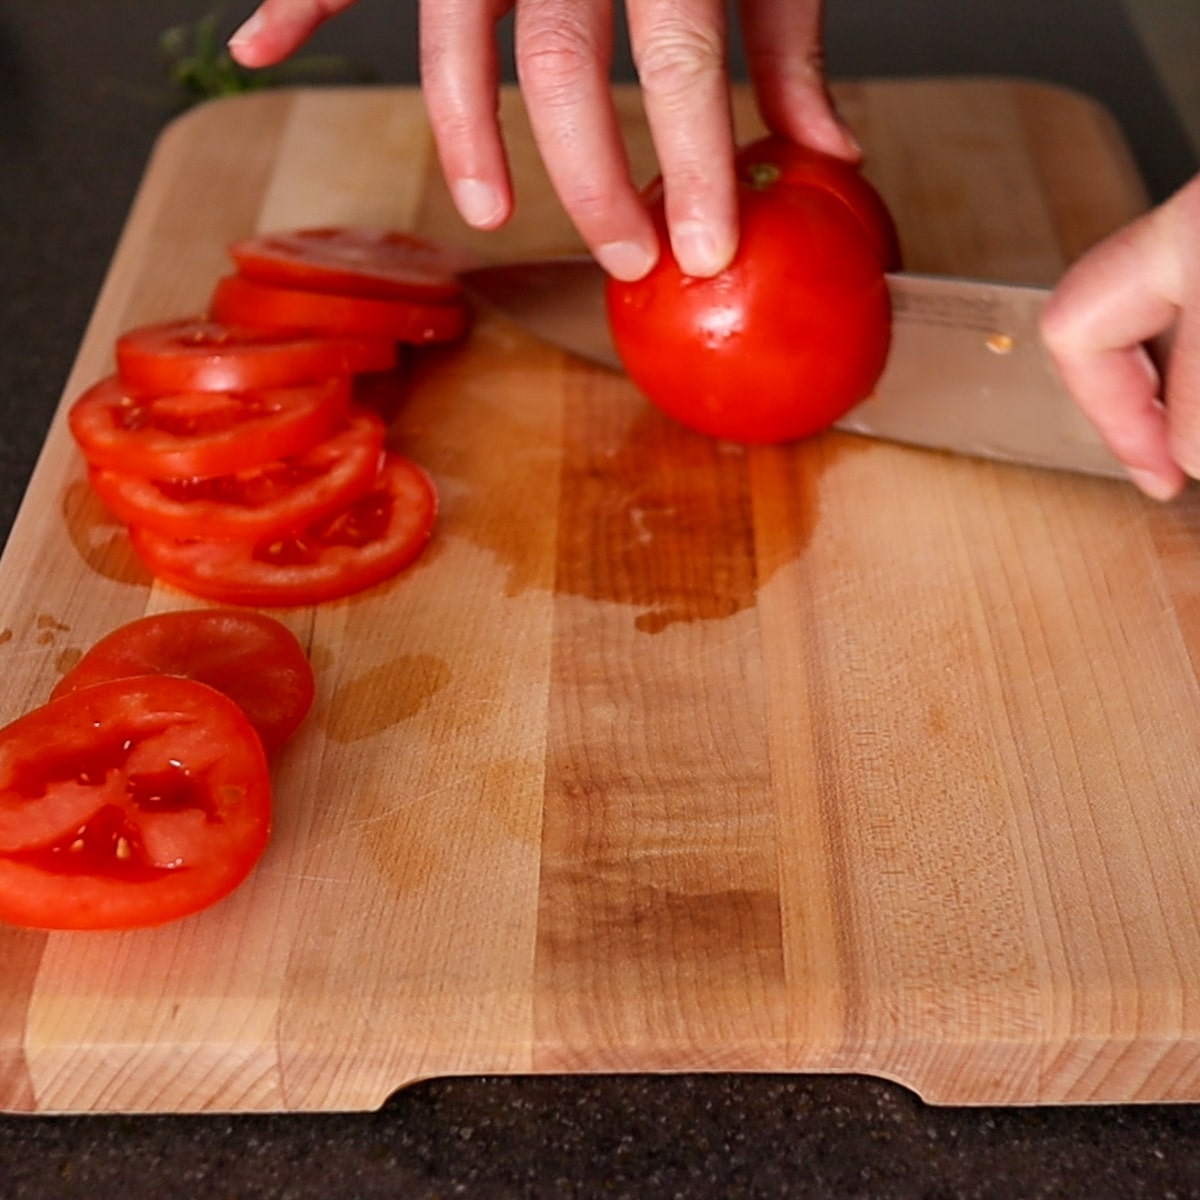 cutting tomatoes in half